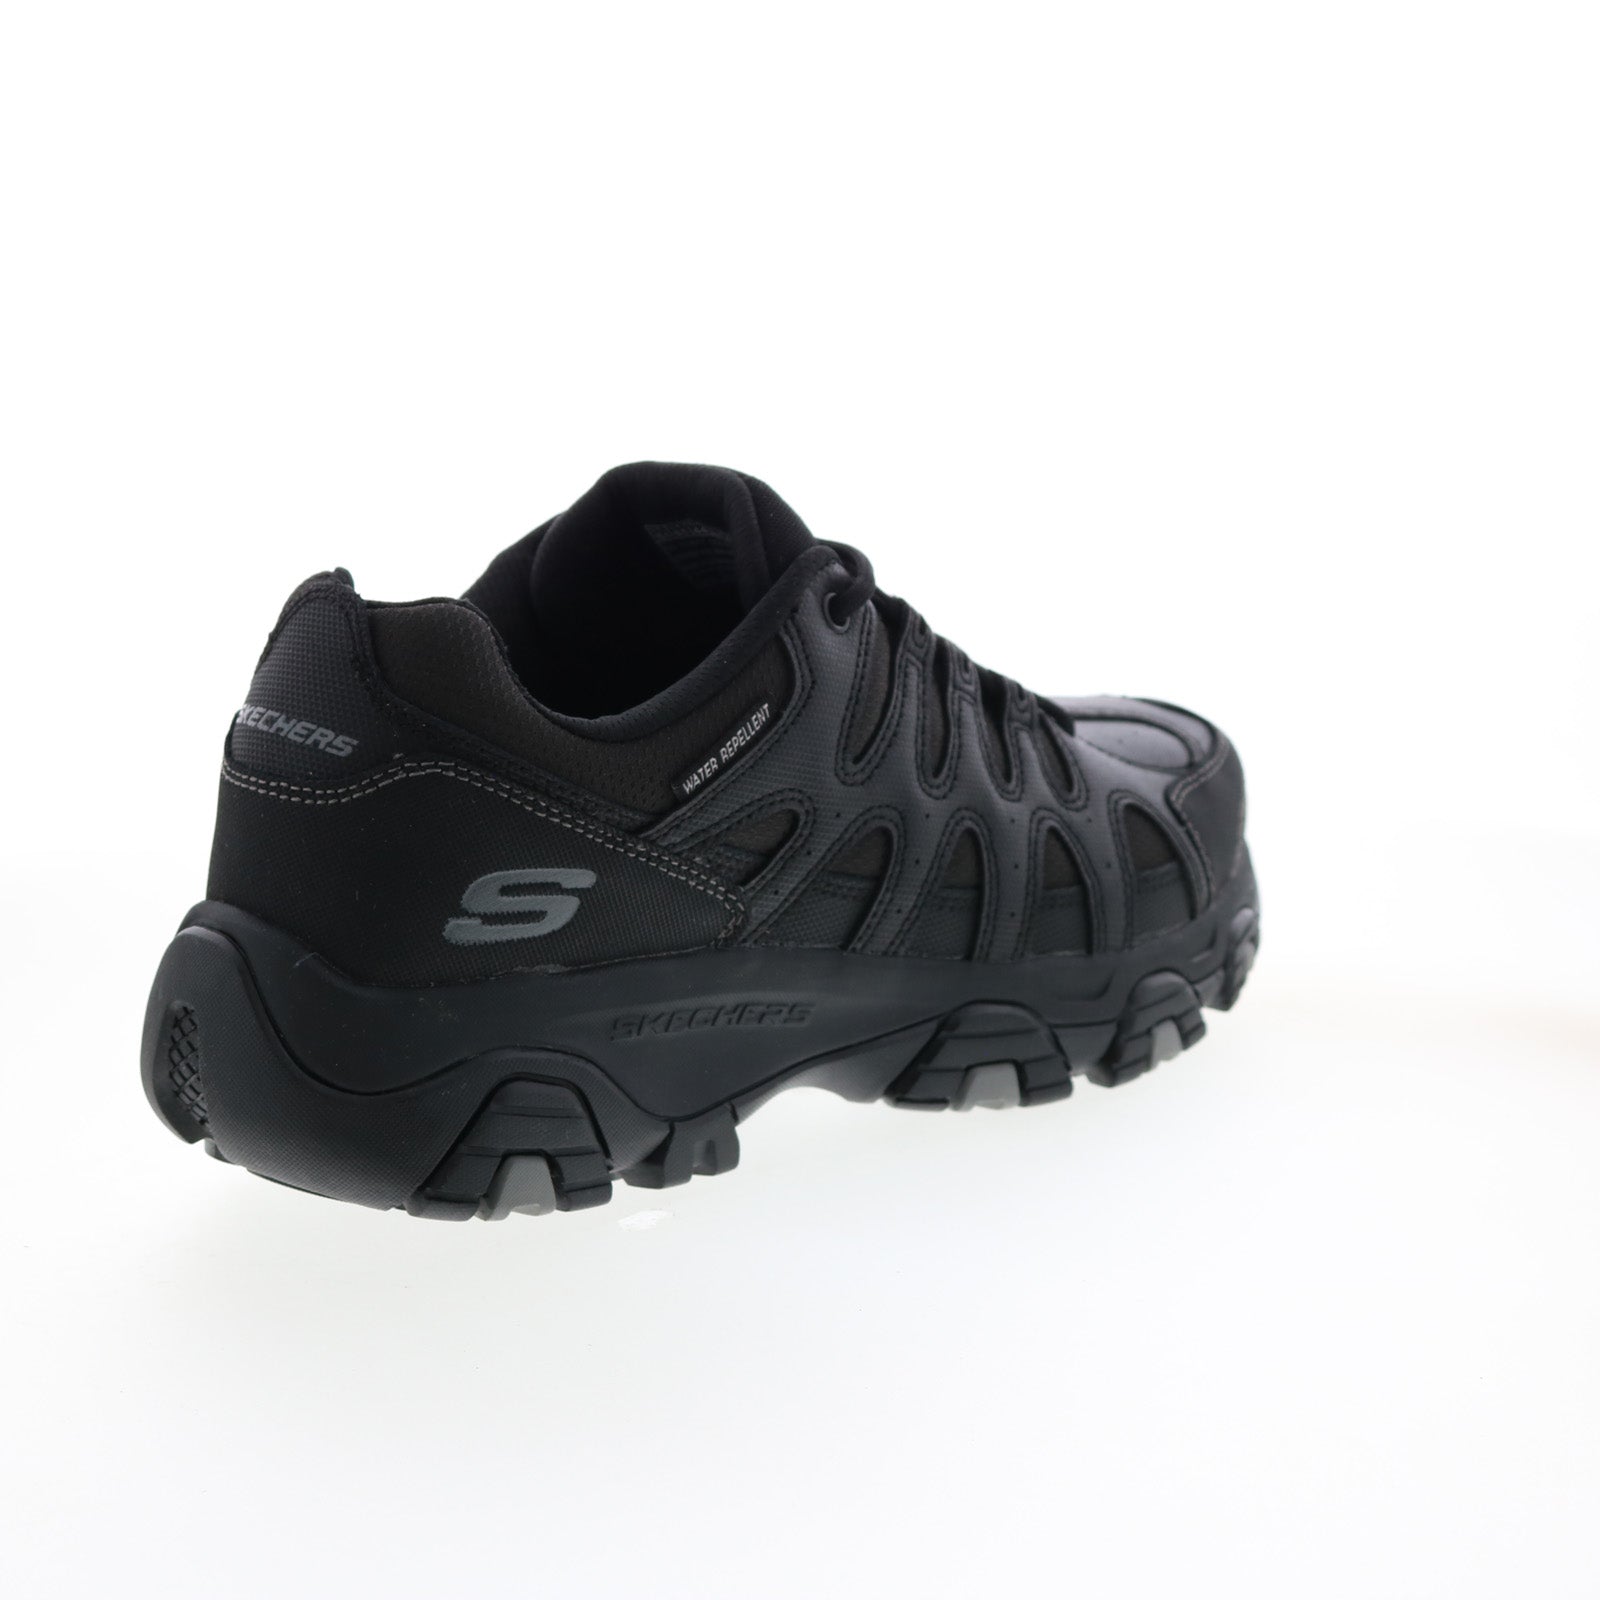 Ruze Sho 51847 Skechers - Athletic Dellga Hiking Black Leather Mens Terrabite Shoes